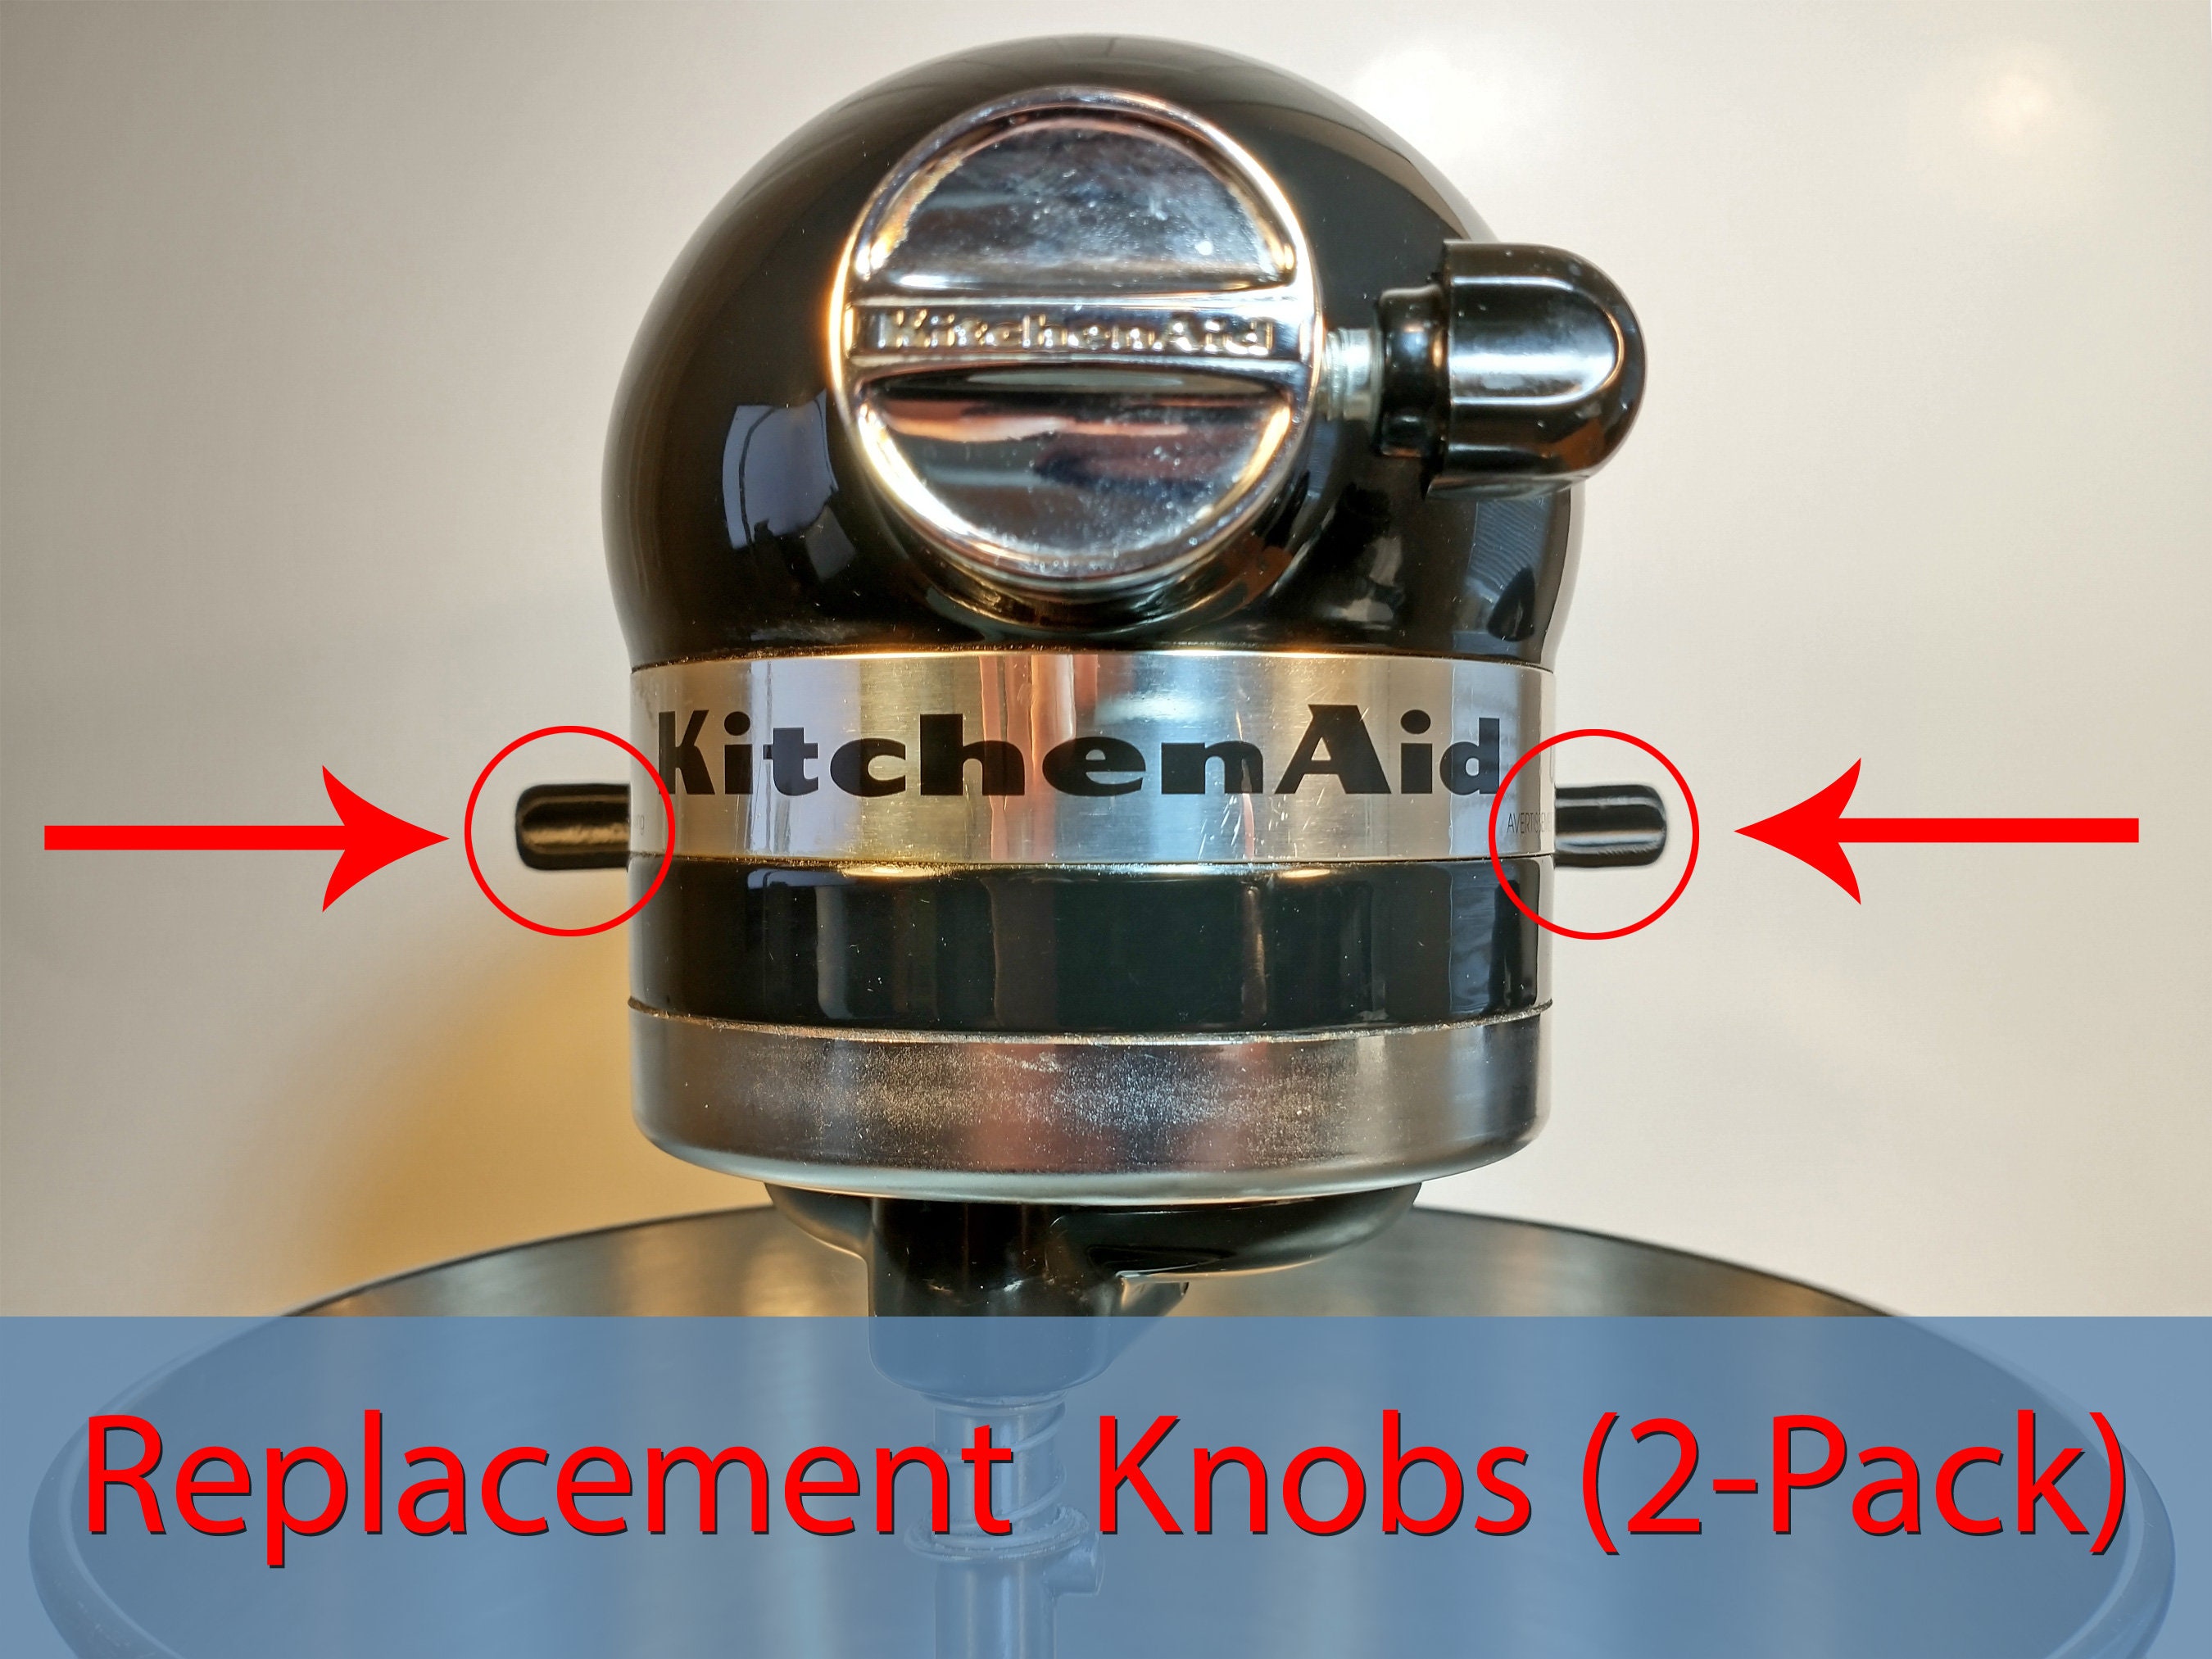 Aftermarket Lock and Speed Knob parts for KitchenAid Stand Mixer kitchen aid